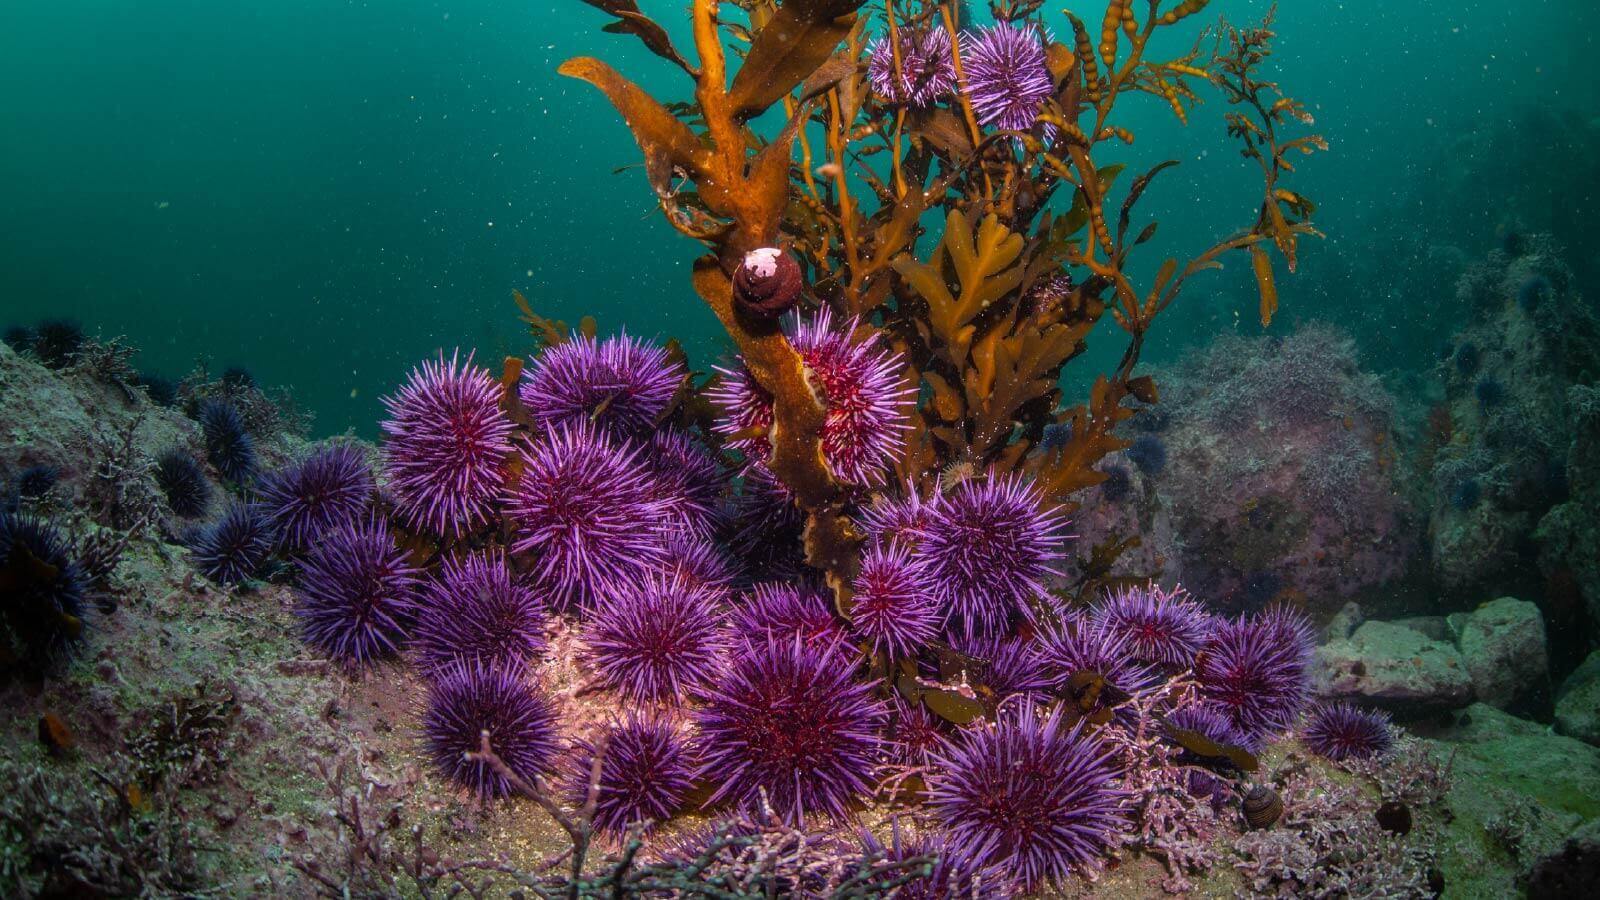 Saving California’s kelp forests